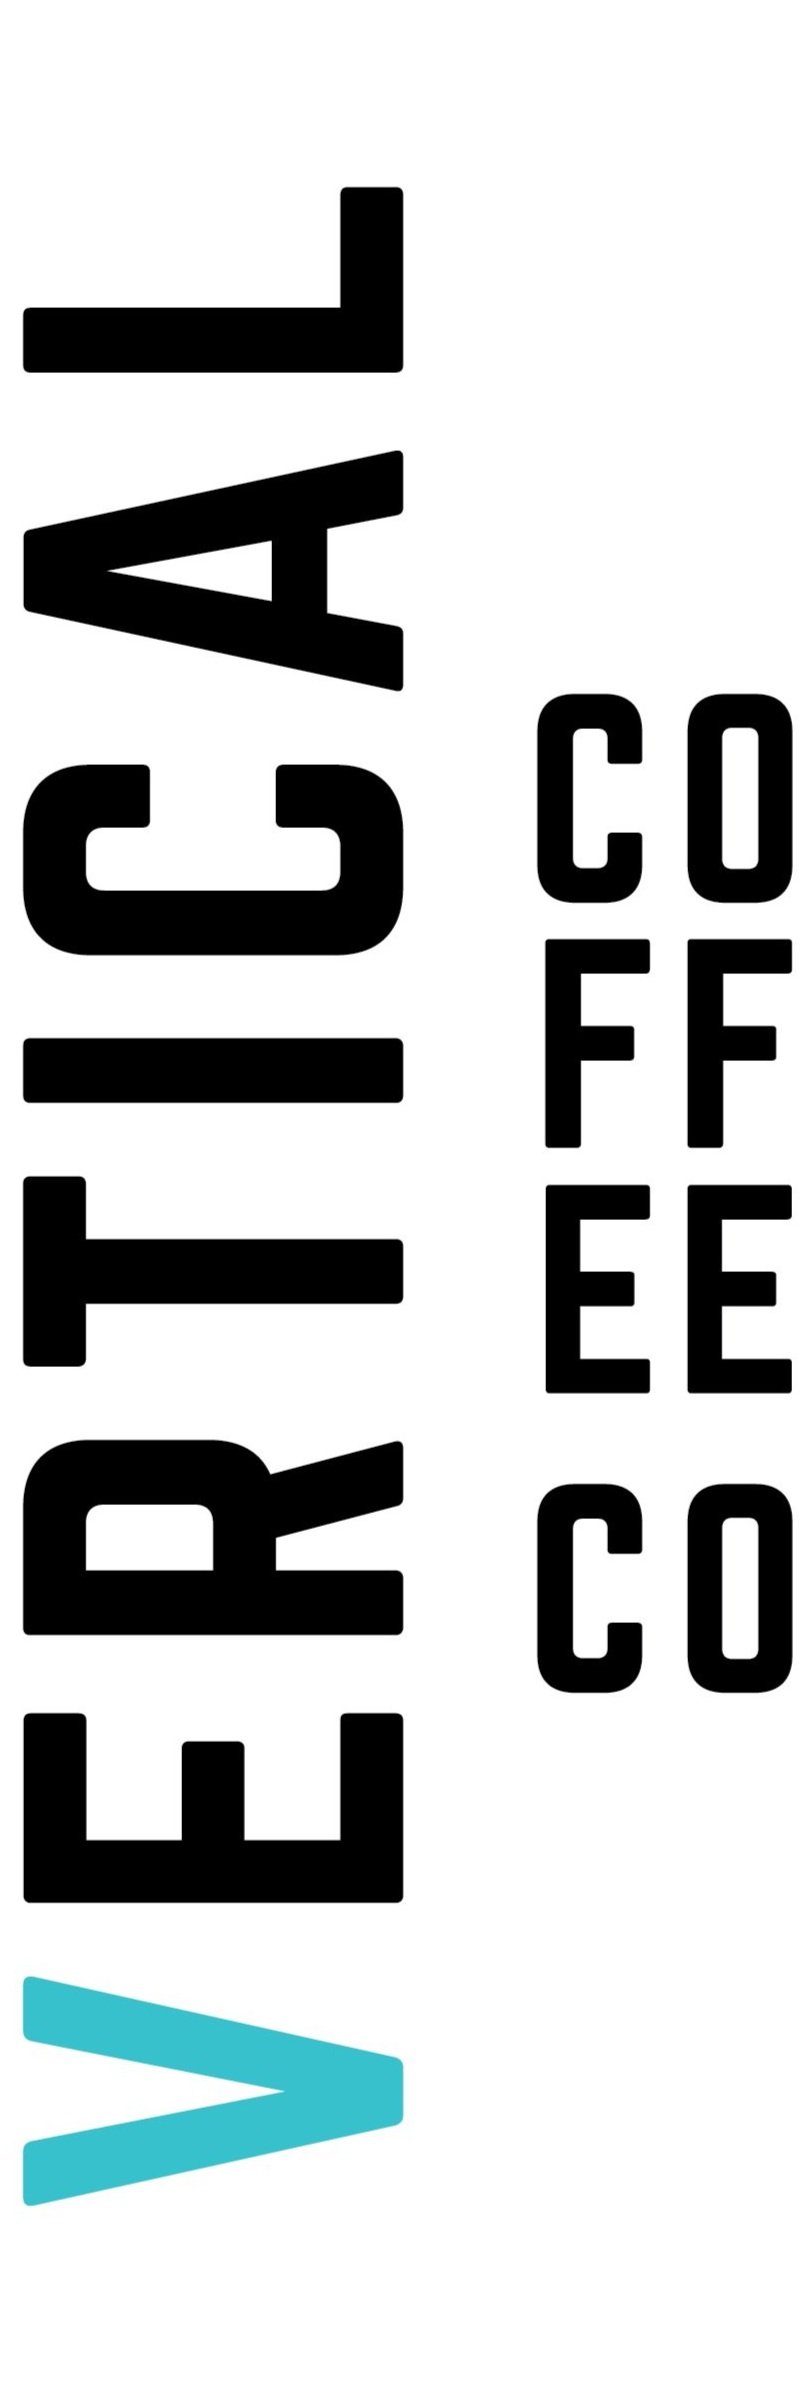 Vertical Coffee Company